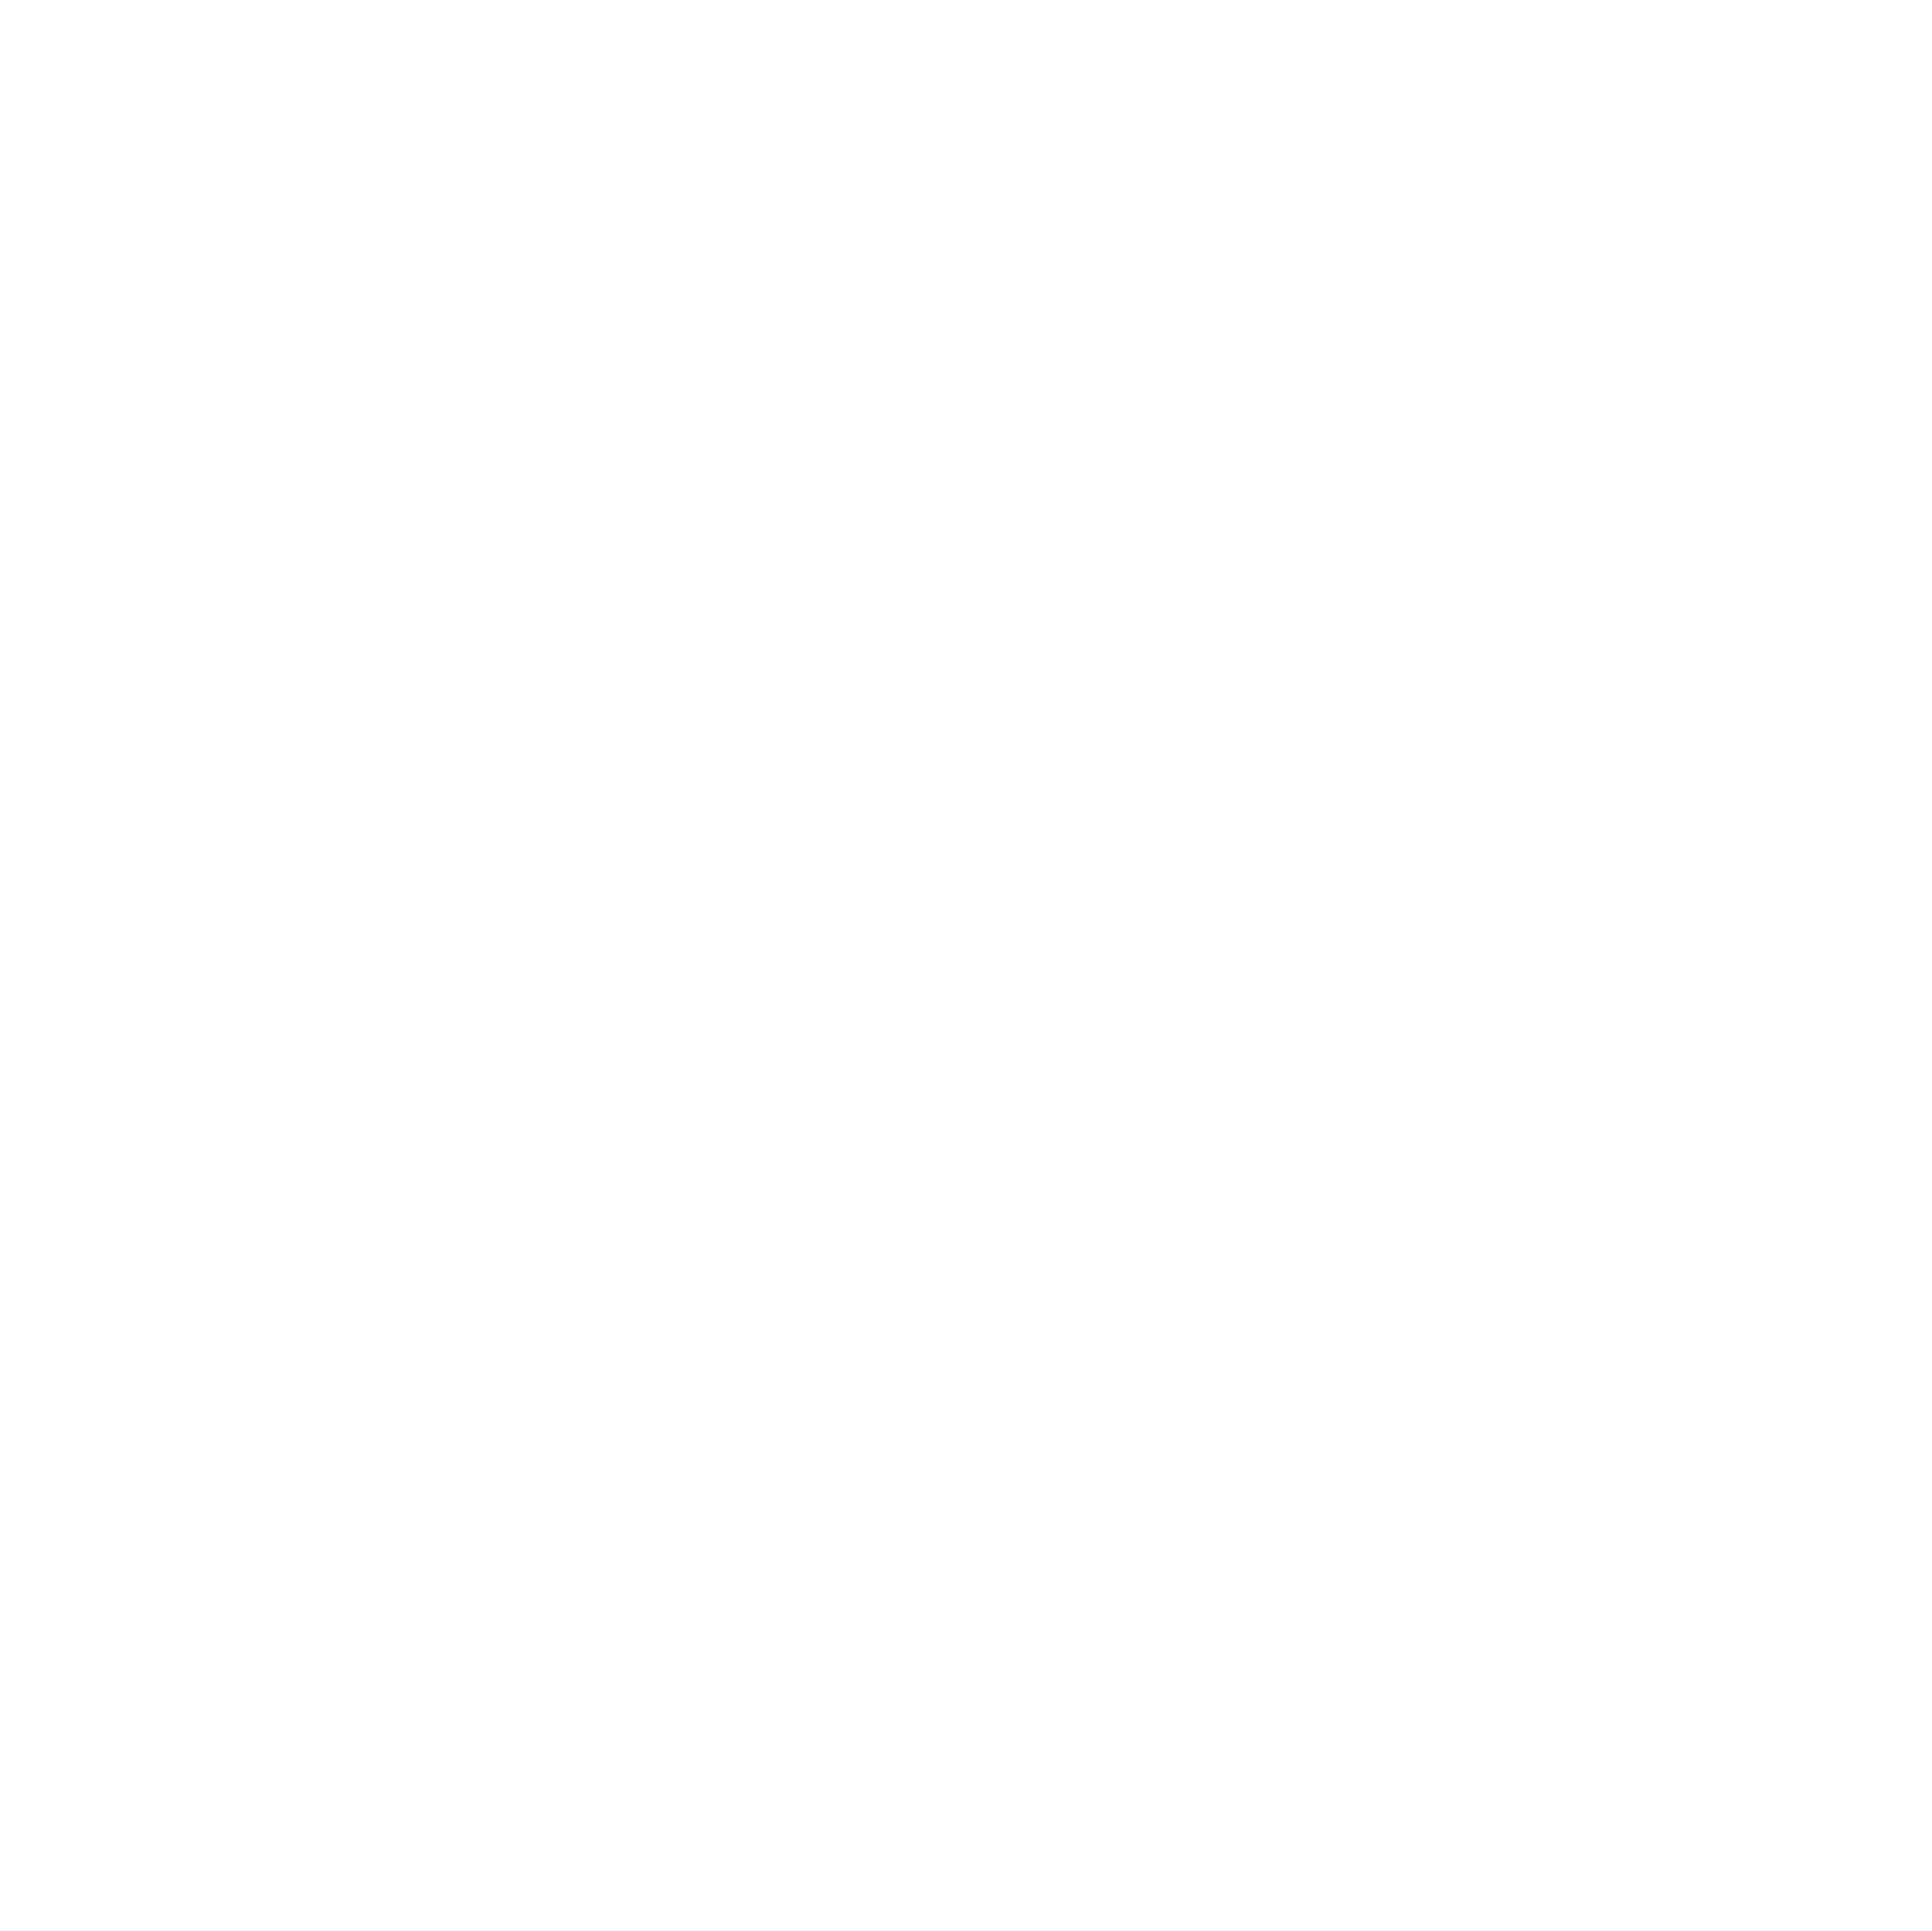 Home Performance Pros